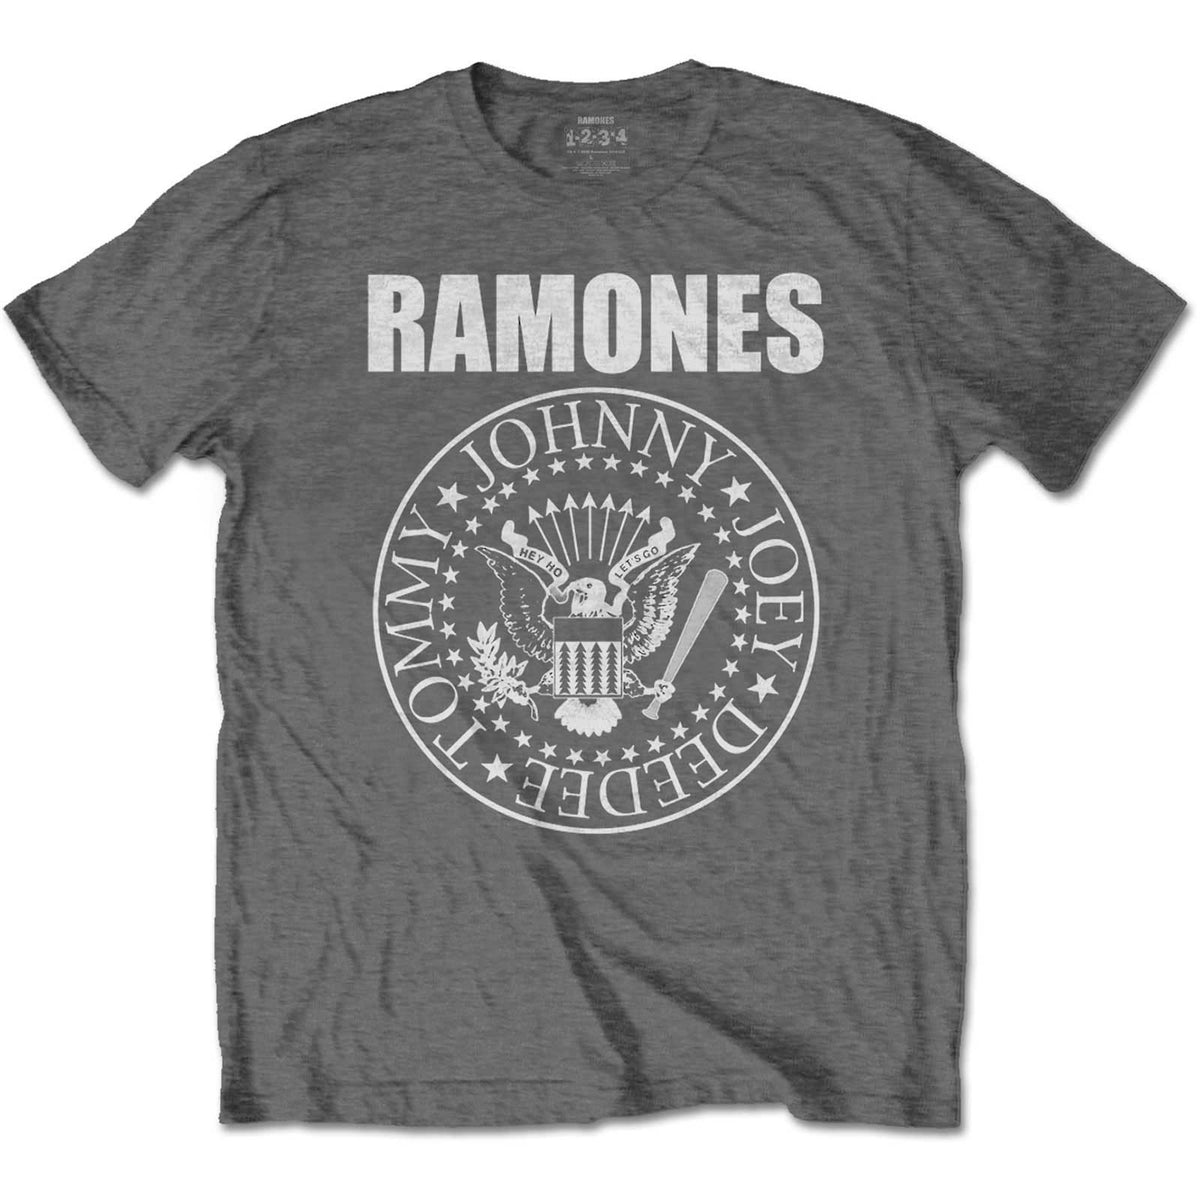 Ramones Kids T-Shirt - Presidential Seal - Dark Grey Kids Official Licensed Design